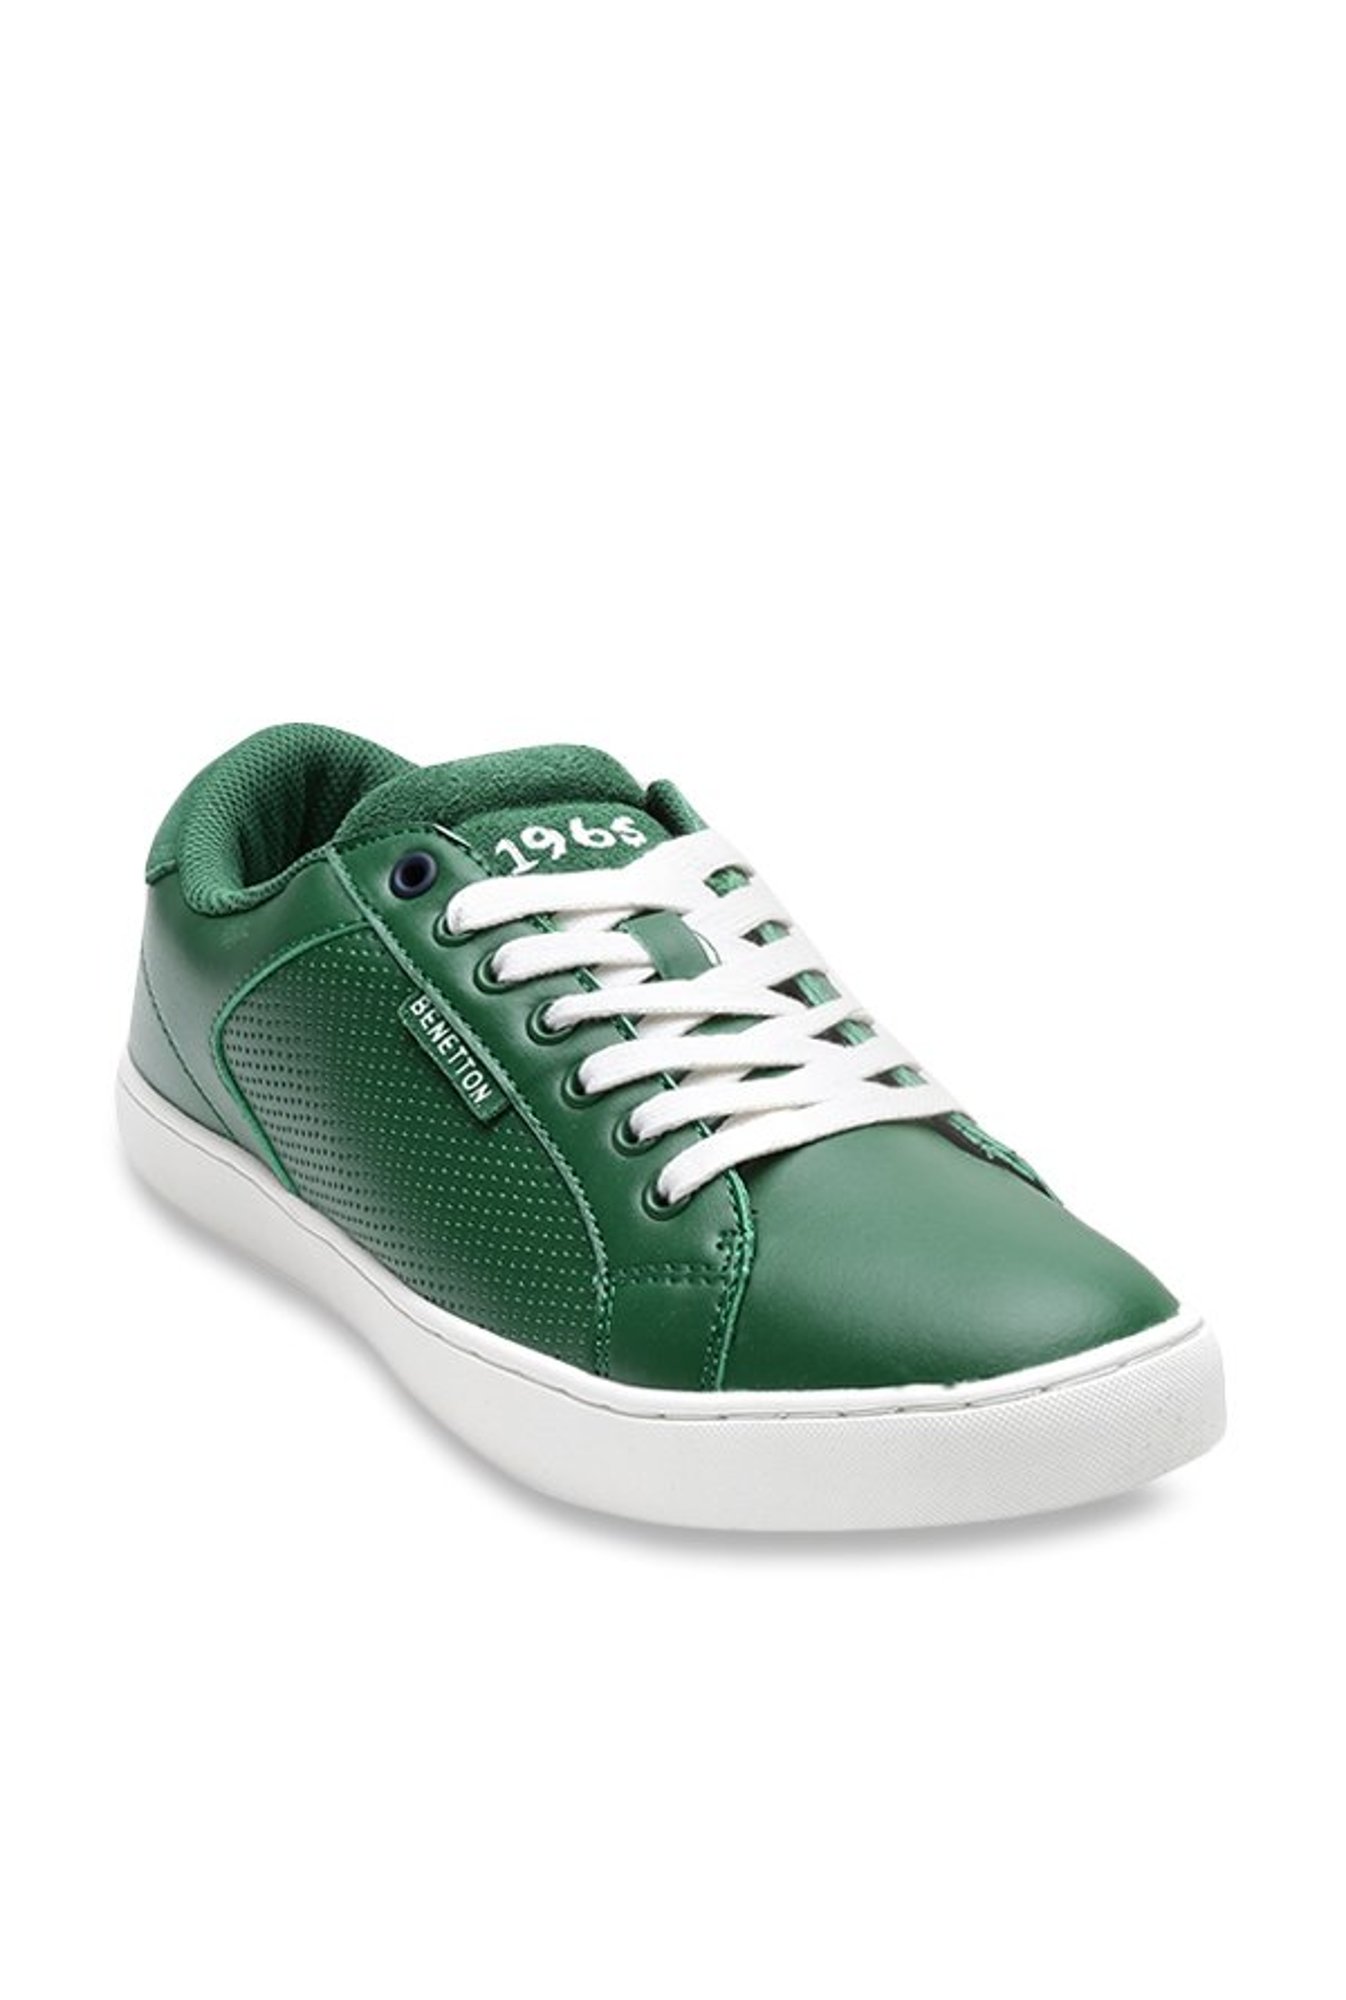 benetton green shoes